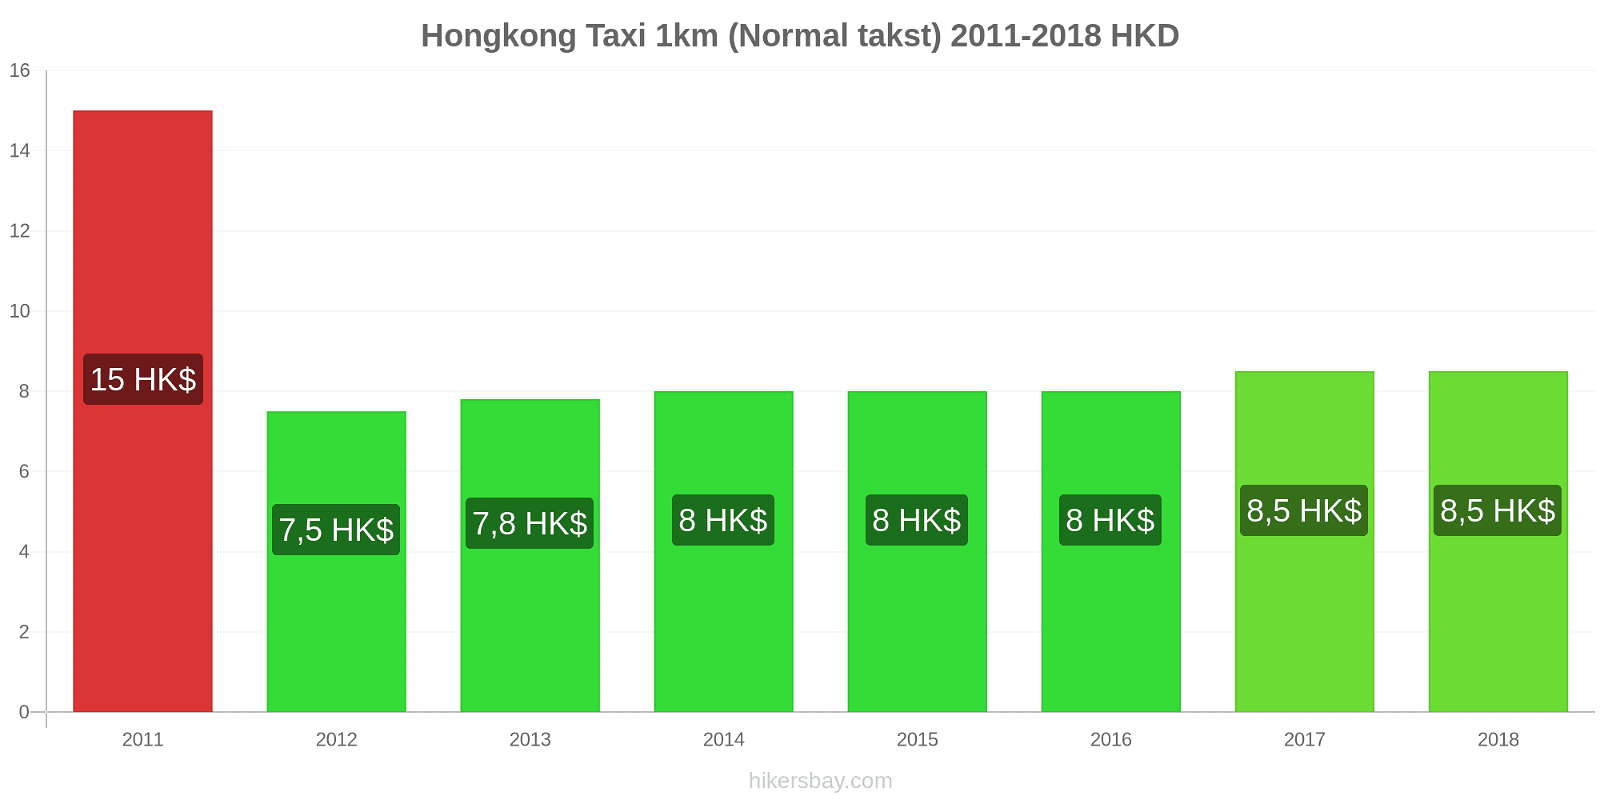 Hongkong prisændringer Taxi 1km (normal takst) hikersbay.com